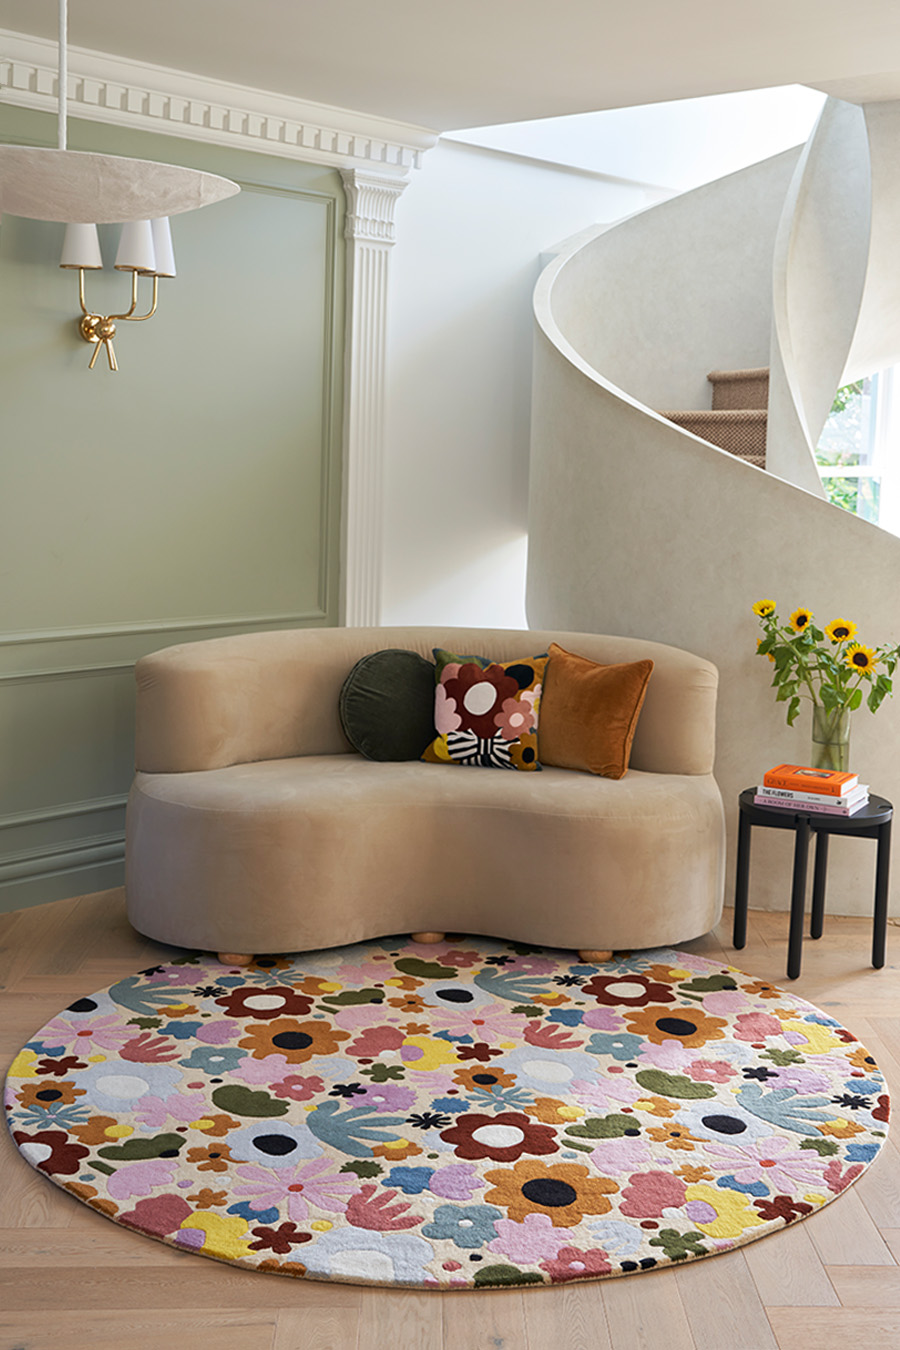 designer rugs castle skippy garden Buttercup lo lr3